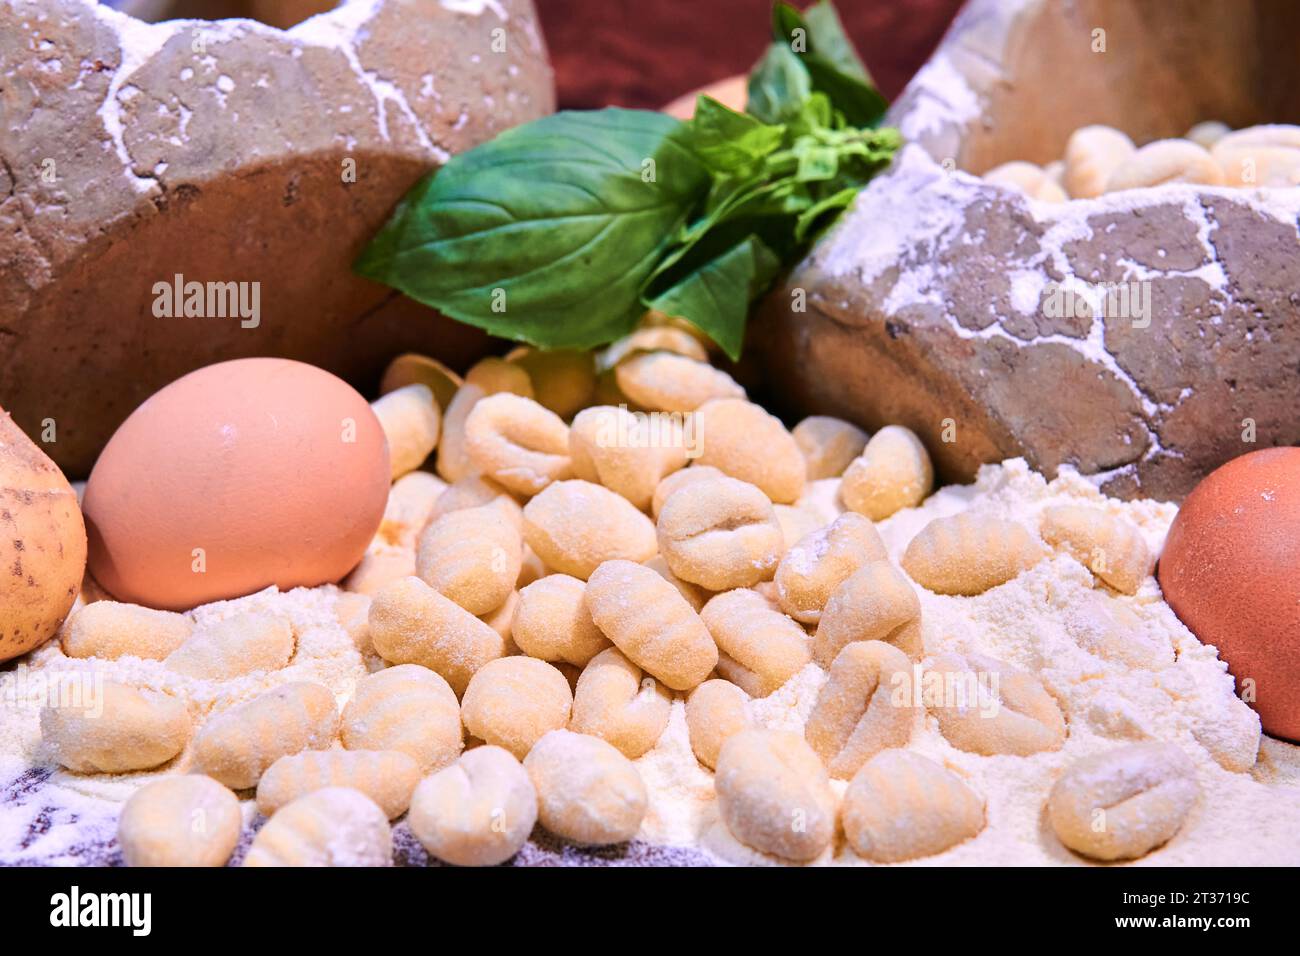 potato gnocchi pasta ingredients still life Stock Photo